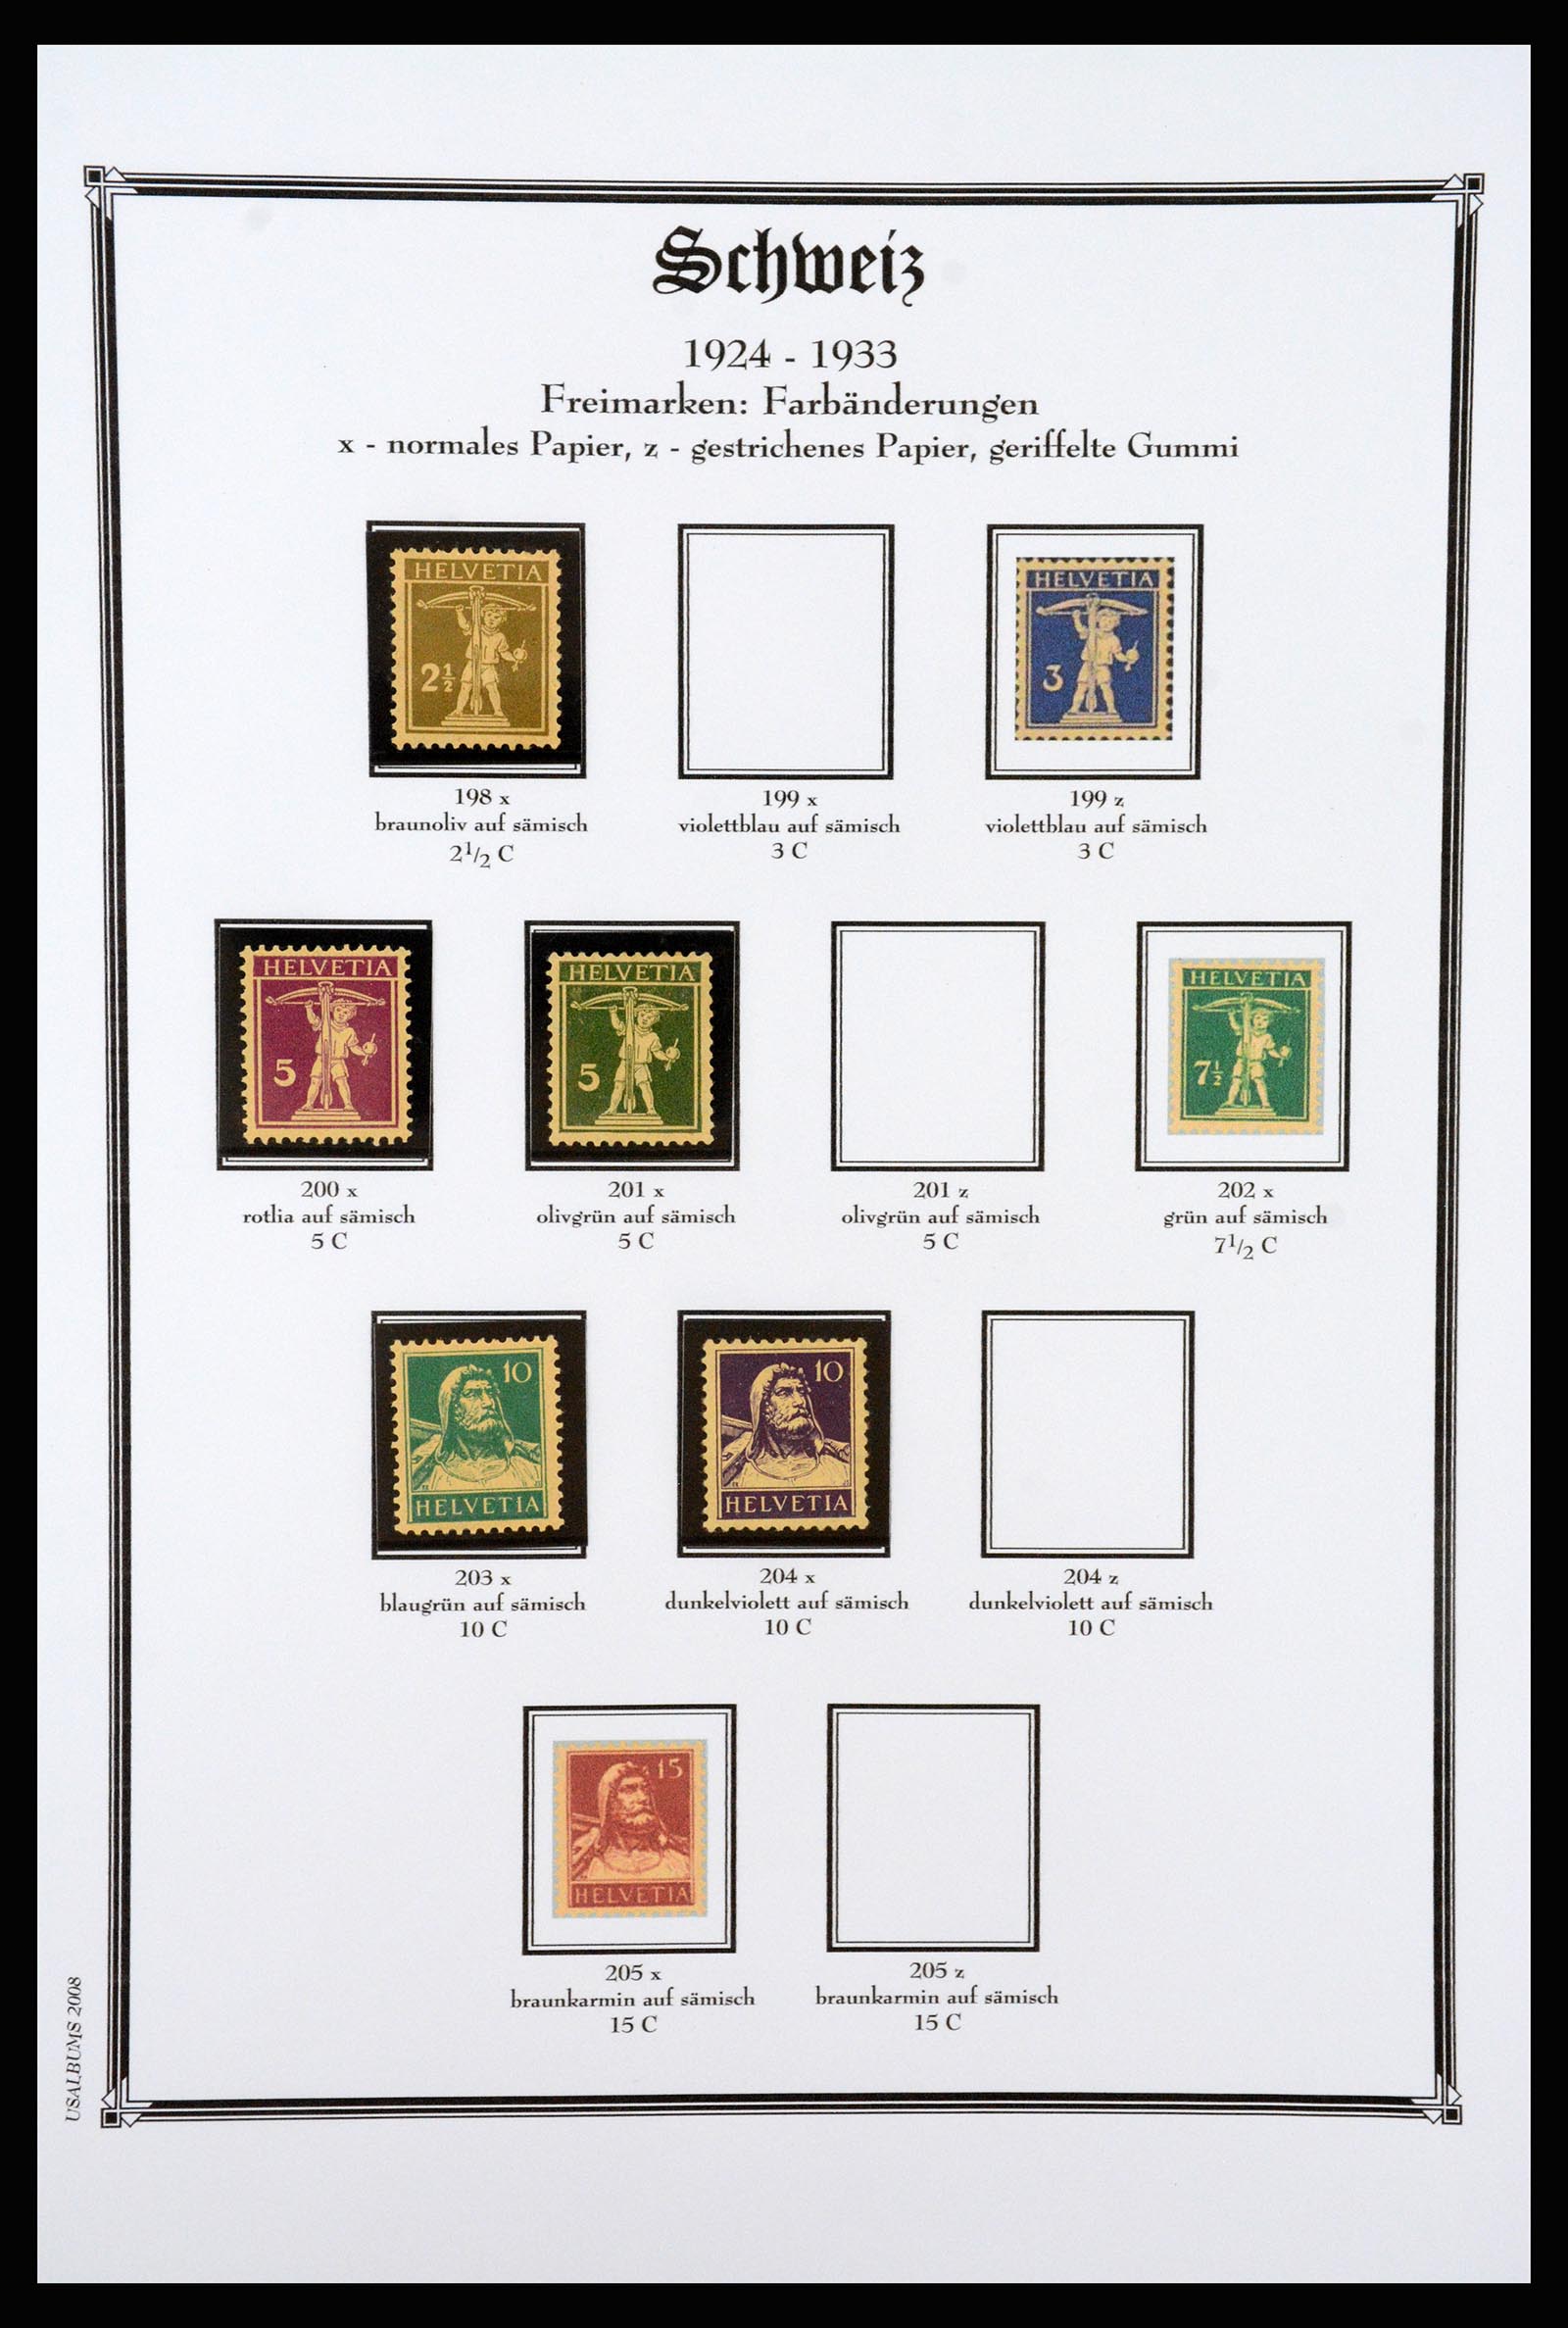 37159 039 - Stamp collection 37159 Switzerland 1862-2000.